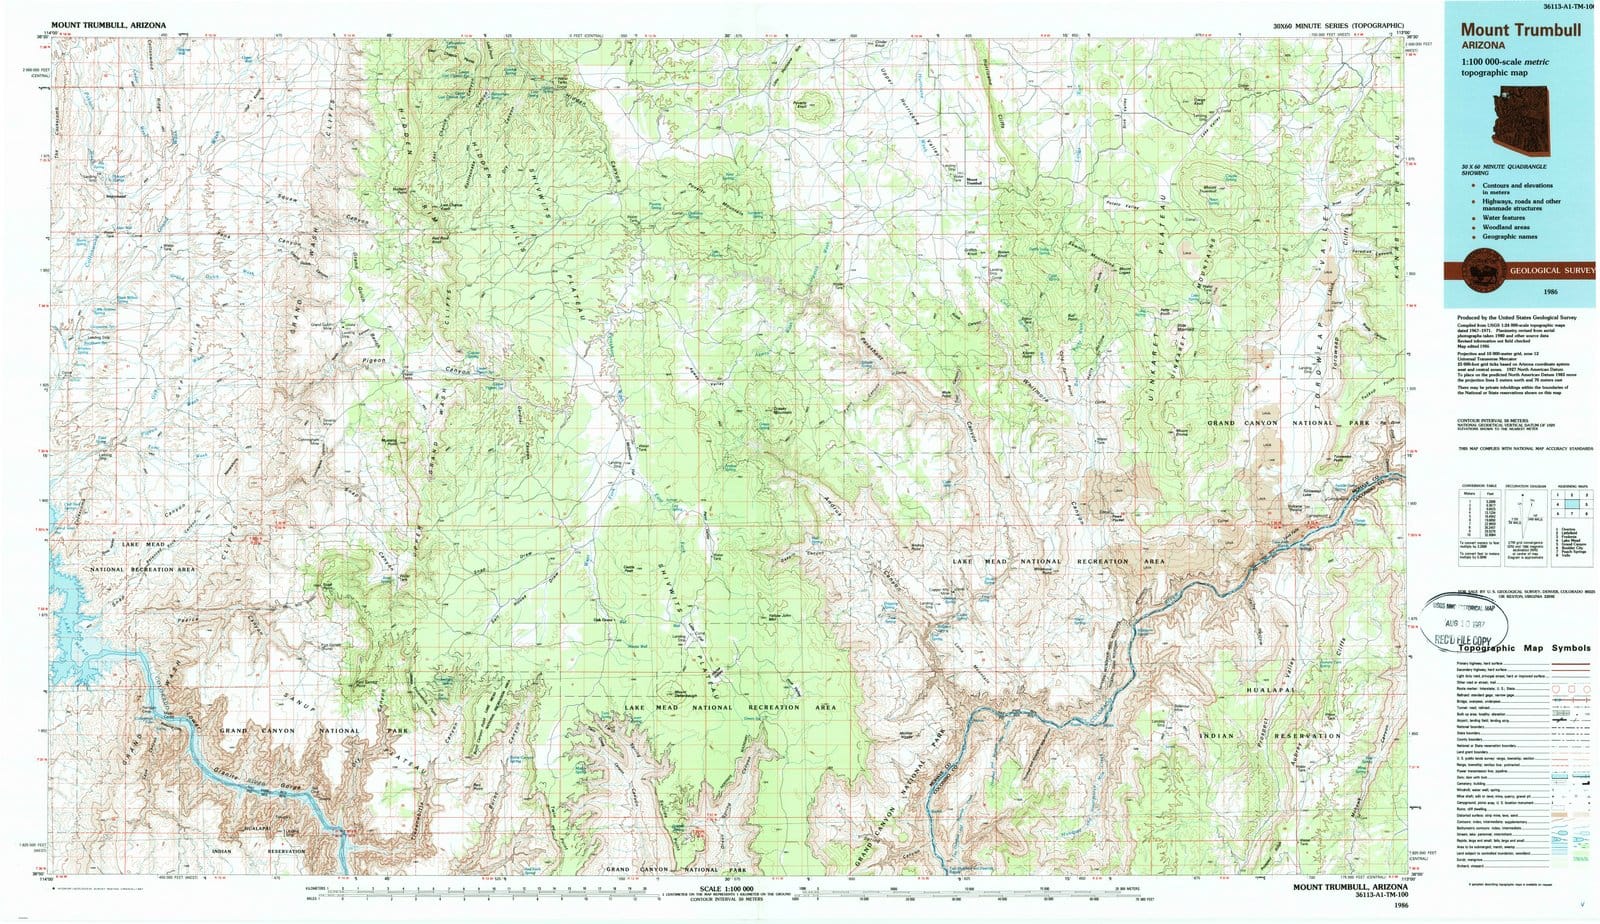 1986 Mount Trumbull, AZ - Arizona - USGS Topographic Map